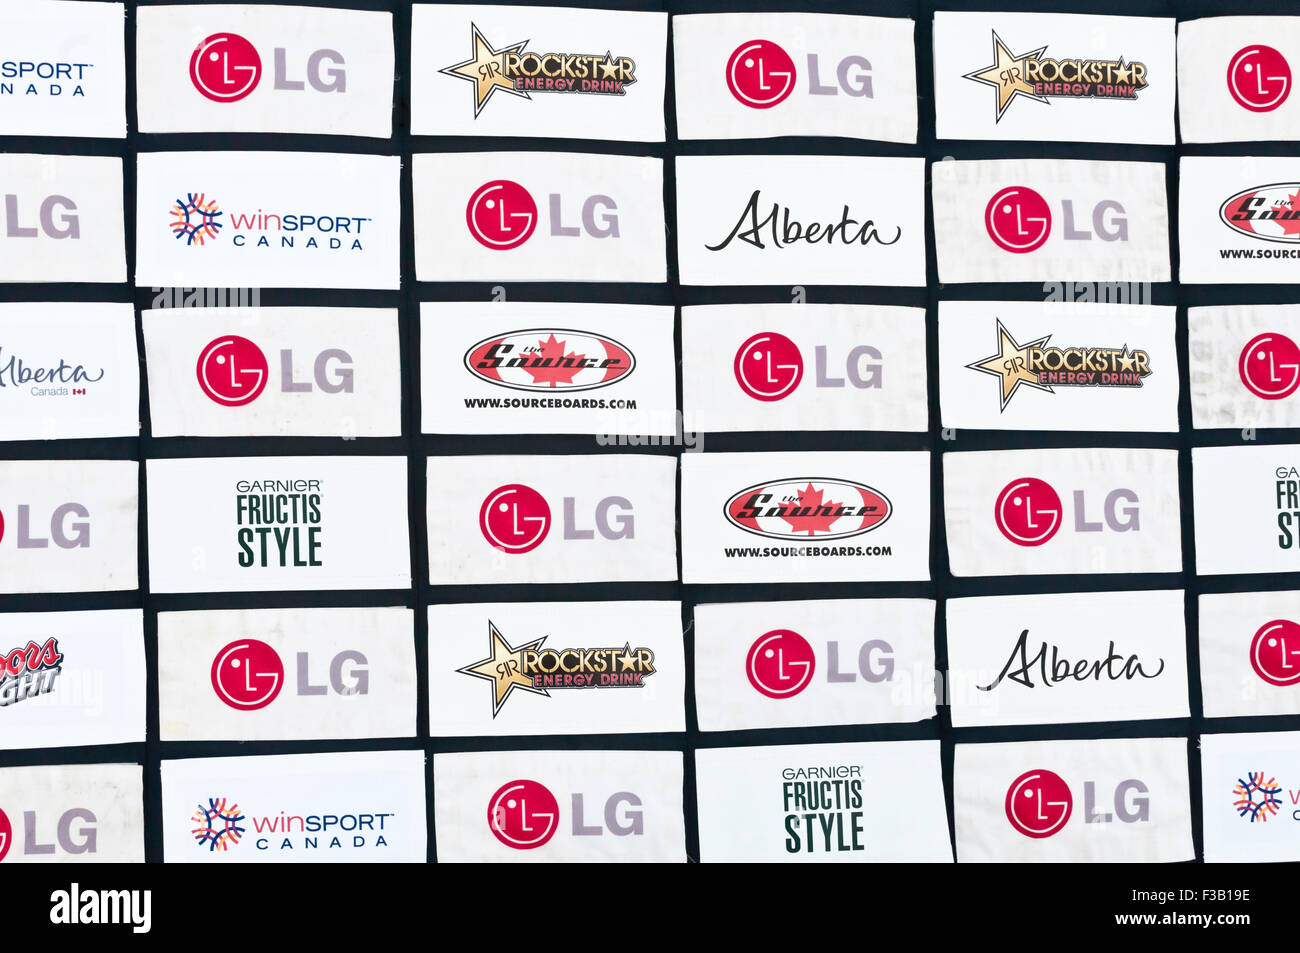 Sponsoring-Board bei LG Snowboard FIS World Cup 2011, Canada Olympic Park, Calgary, Alberta, Kanada Stockfoto